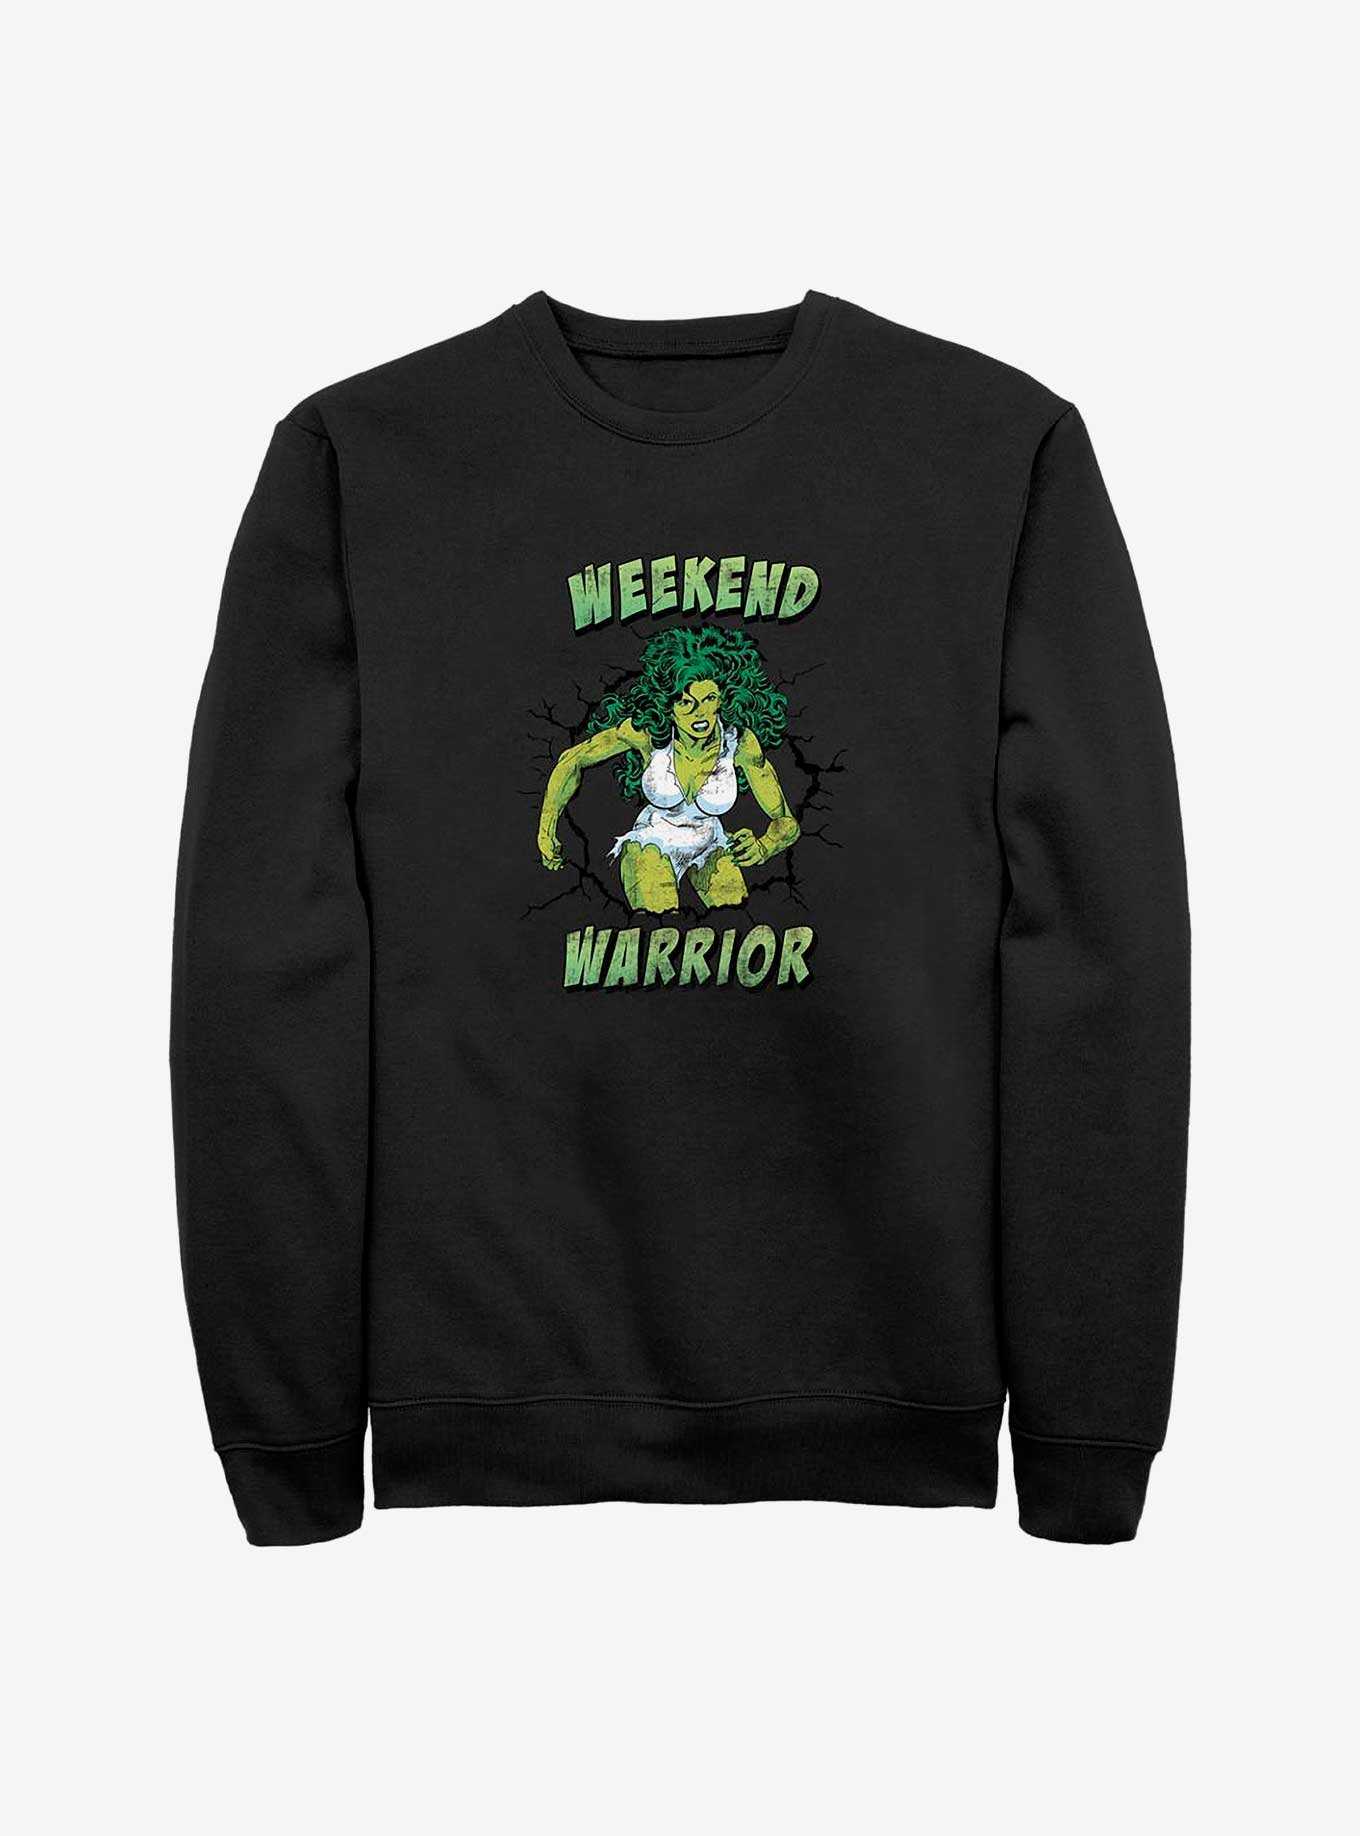 Marvel She-Hulk Weekend Warrior Sweatshirt, , hi-res